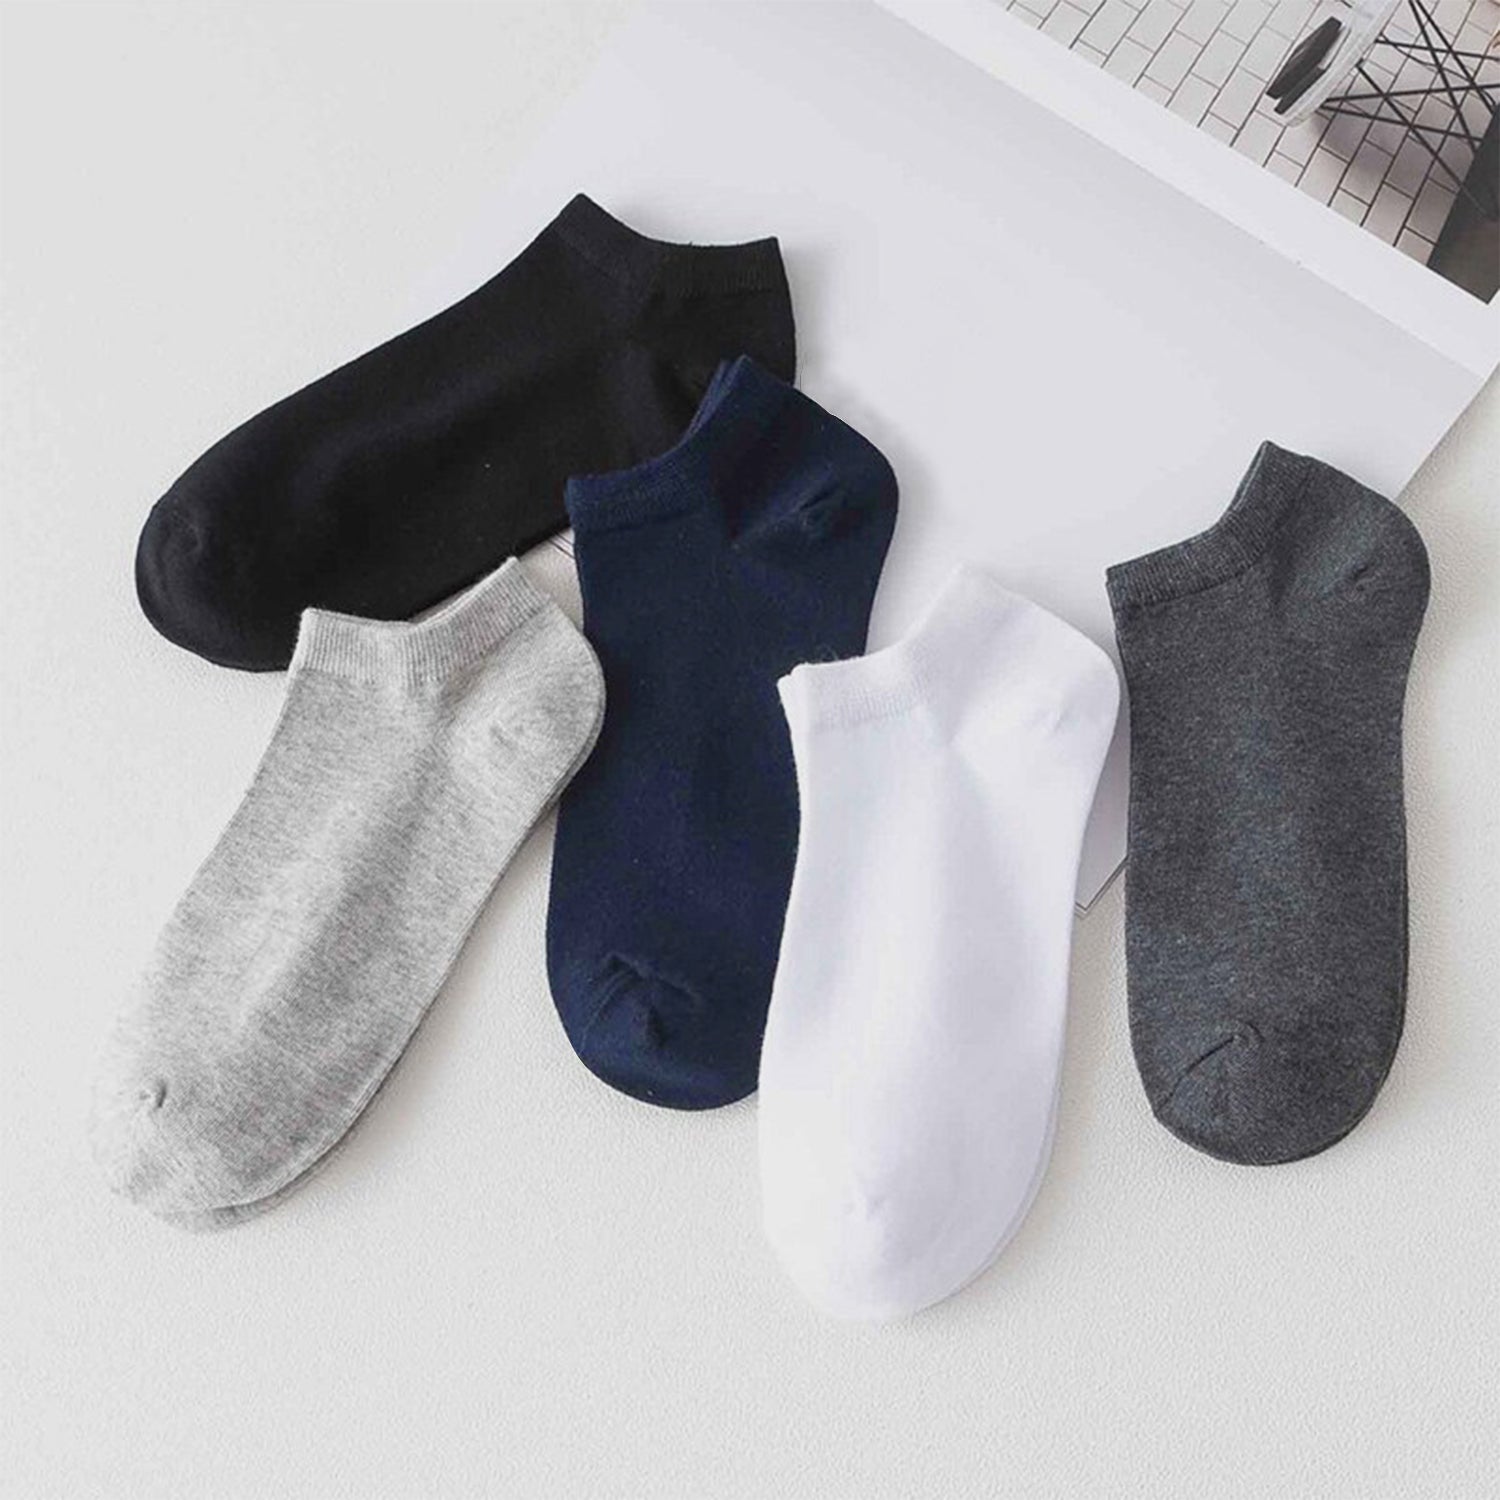 Arctic Wolf Men's Low Cut Socks (Pack of 10 Pairs), Black, White, Dark Grey, Light Grey & Navy Blue